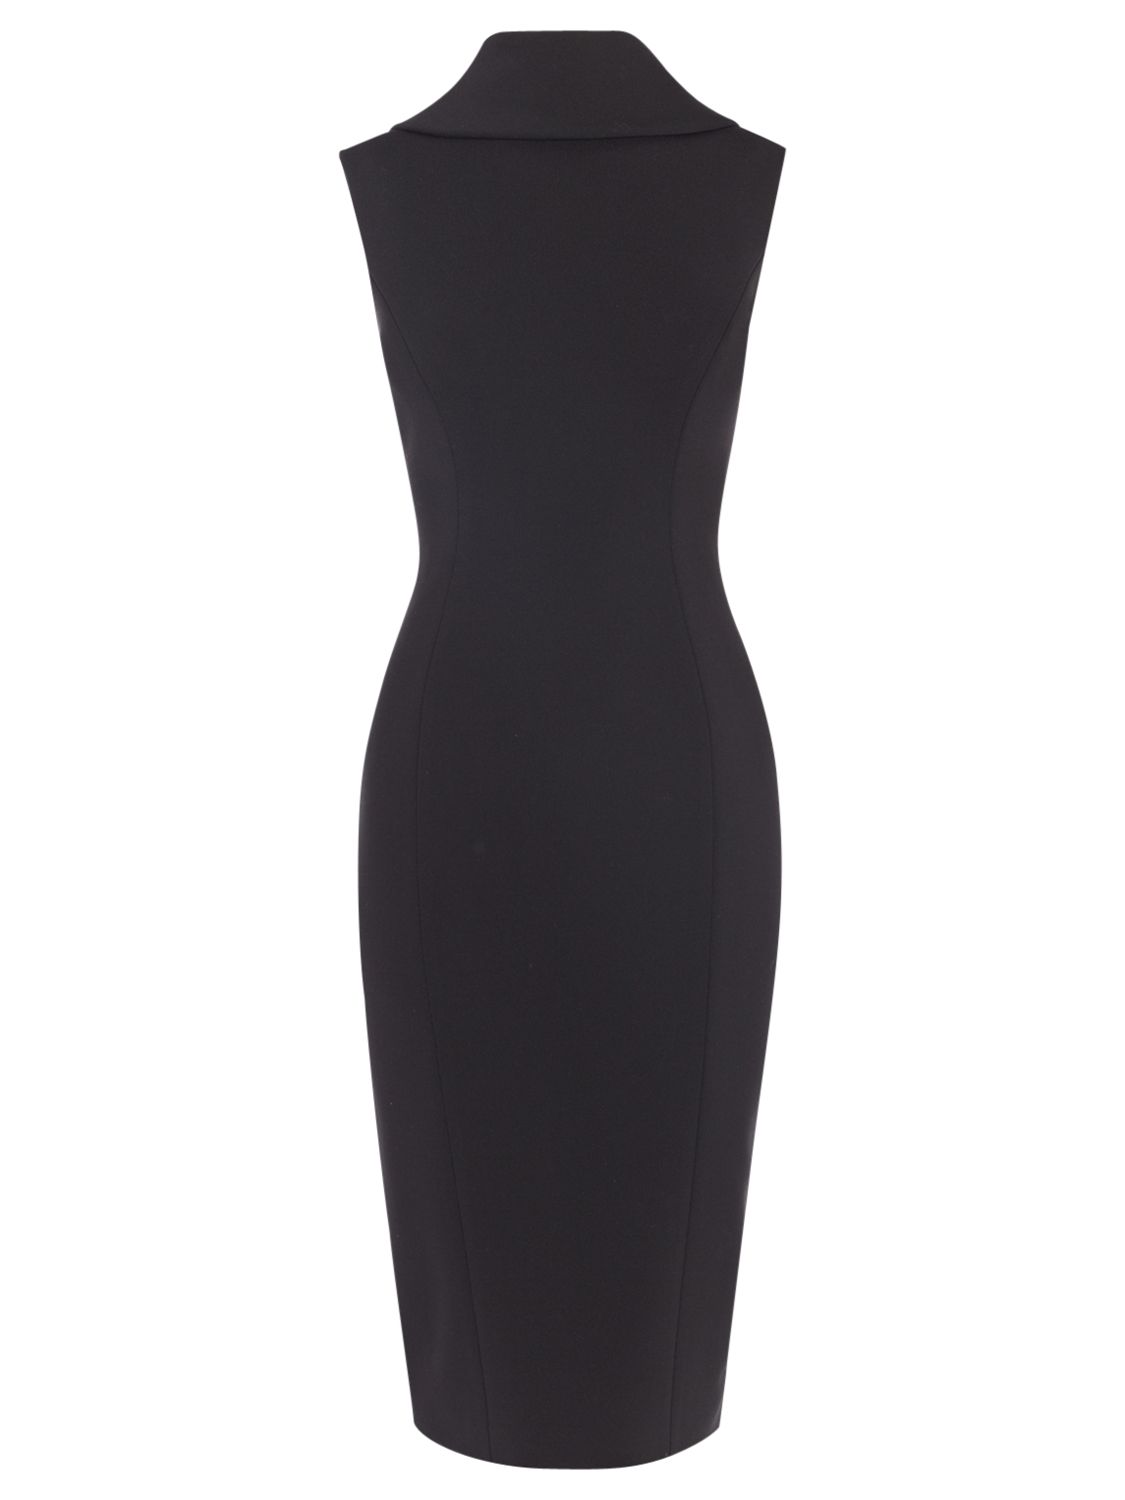 Karen Millen High Neckline Pencil Dress, Black